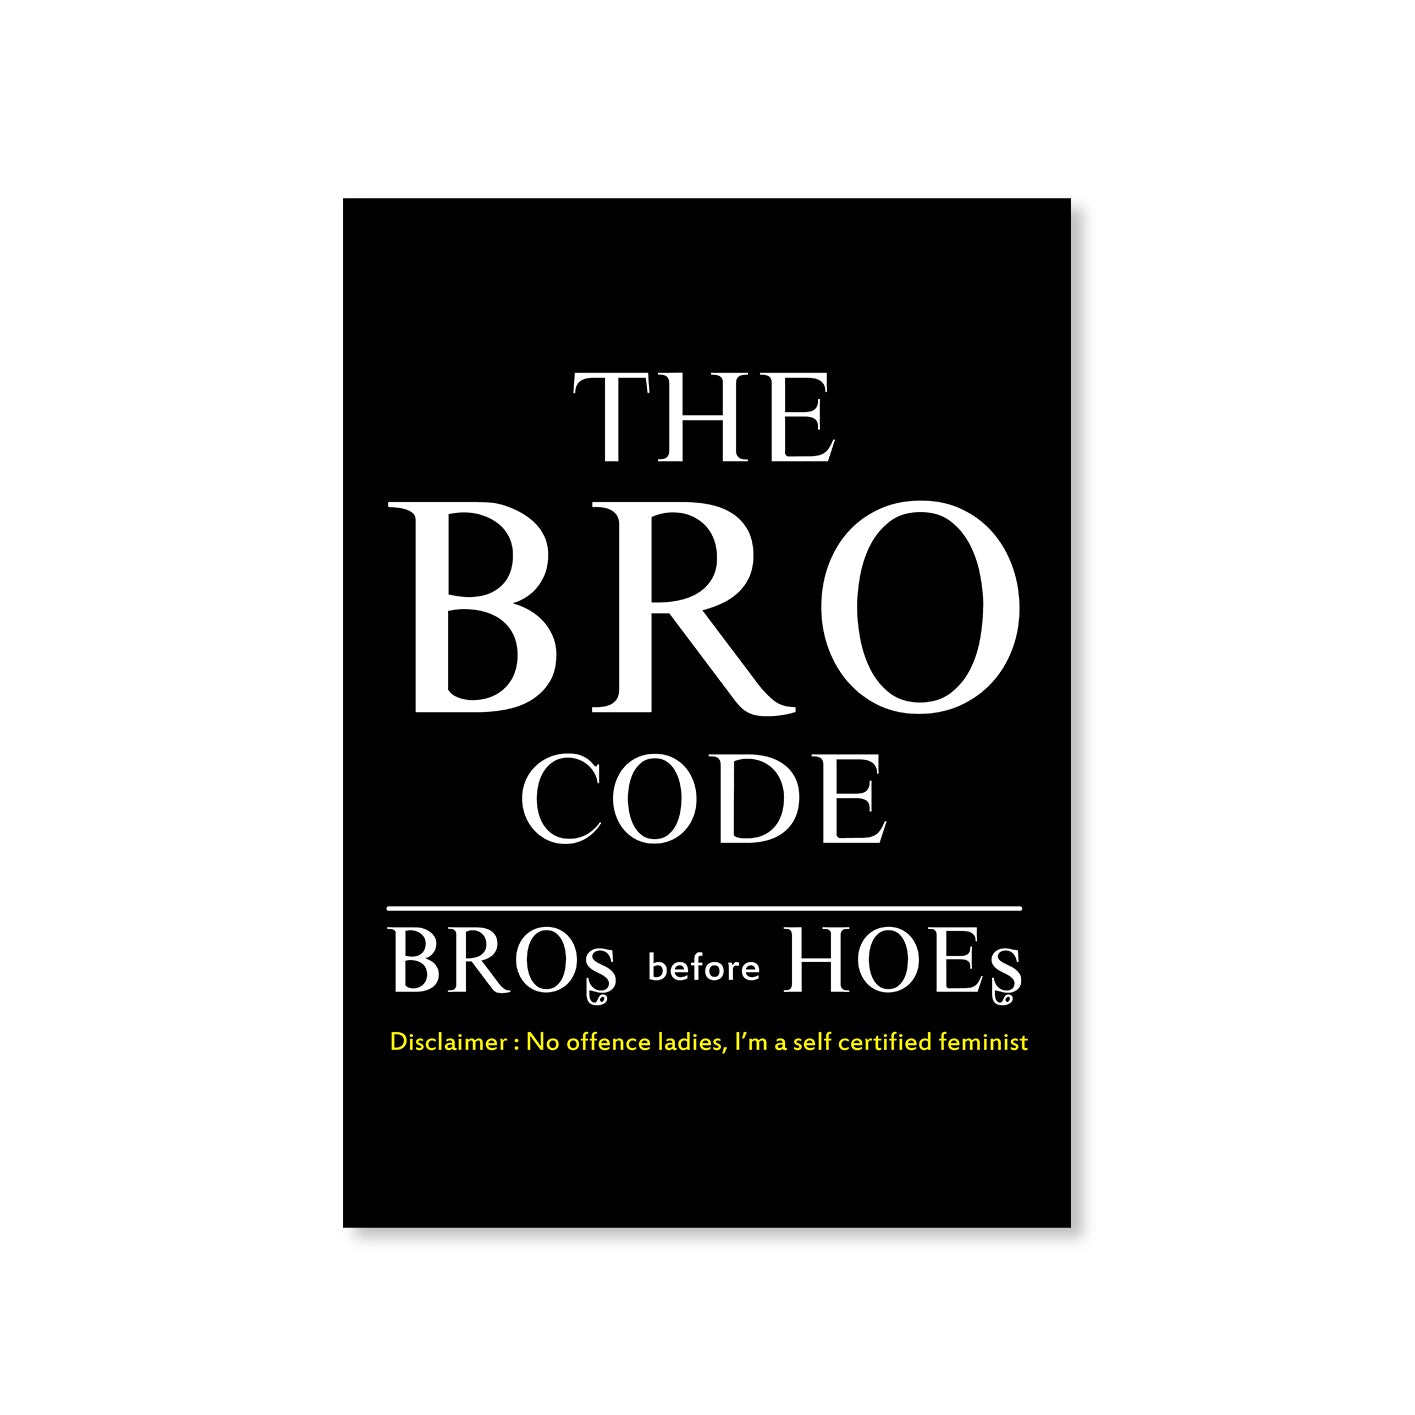 How I Met Your Mother Poster - Bro Code The Banyan Tee TBT